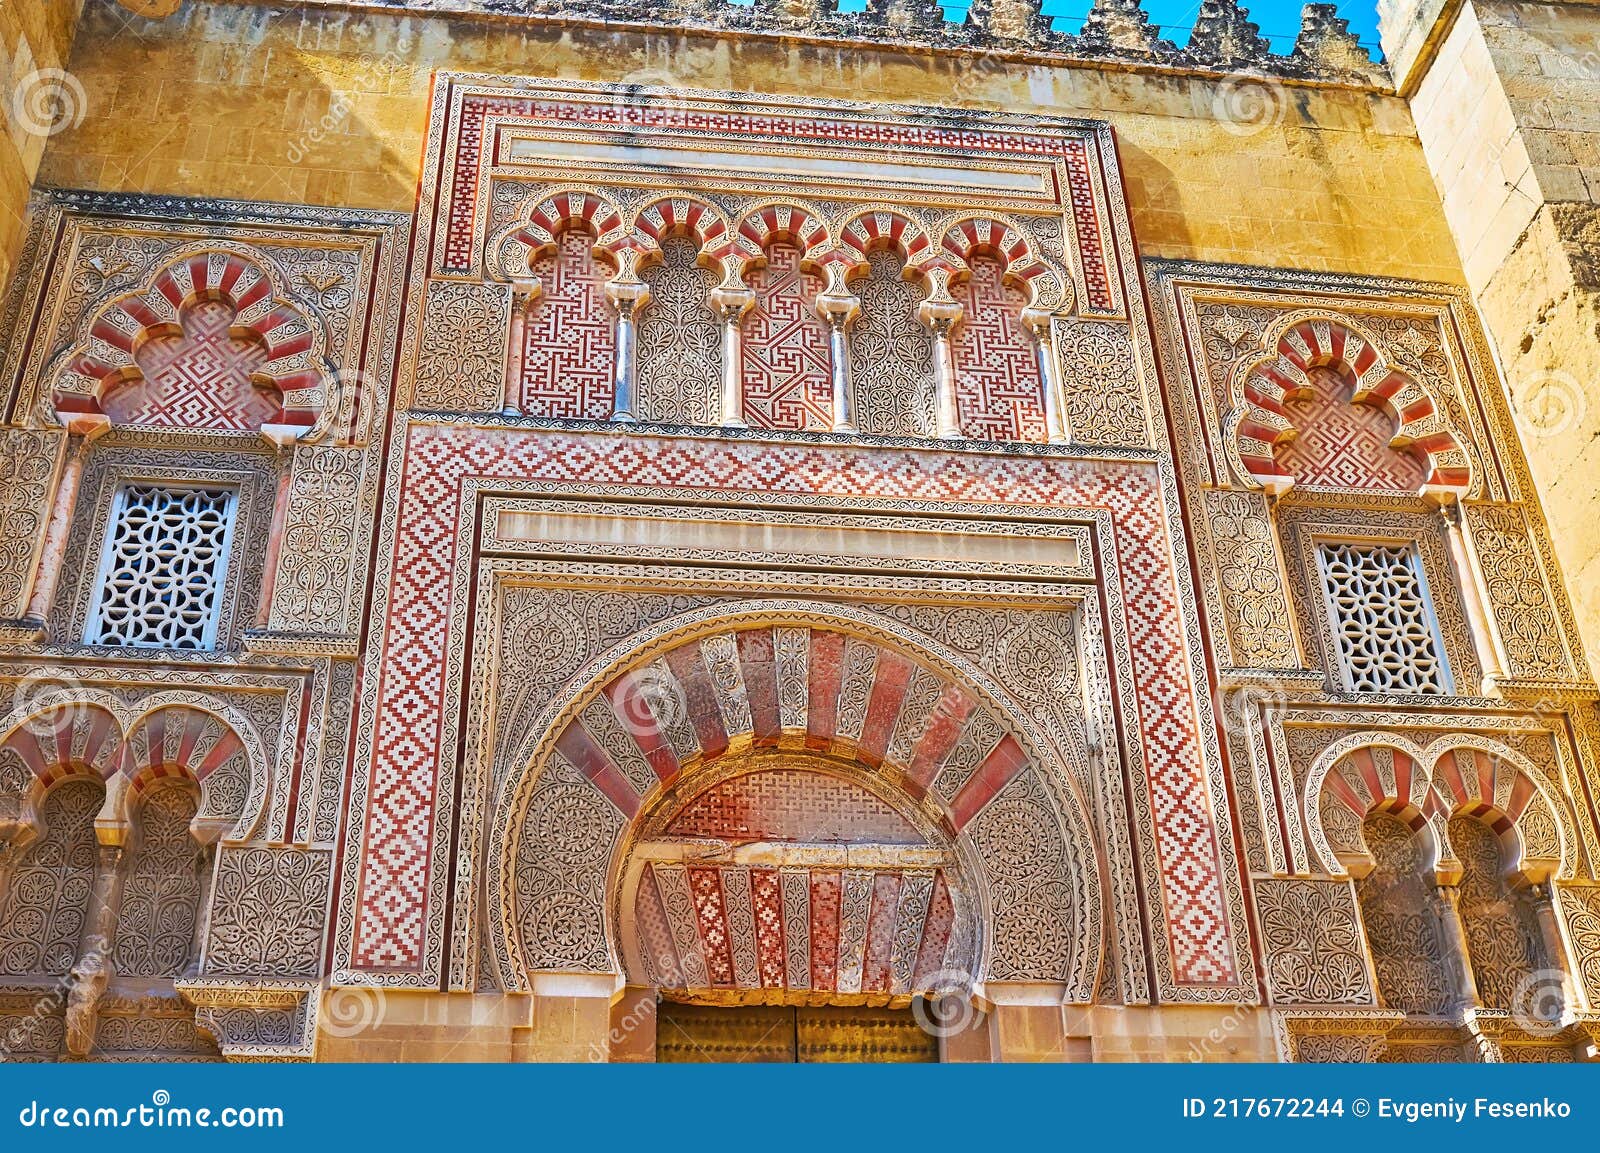 traditional decorations of puerta del baptisterio gate, mezquita, cordoba, spain